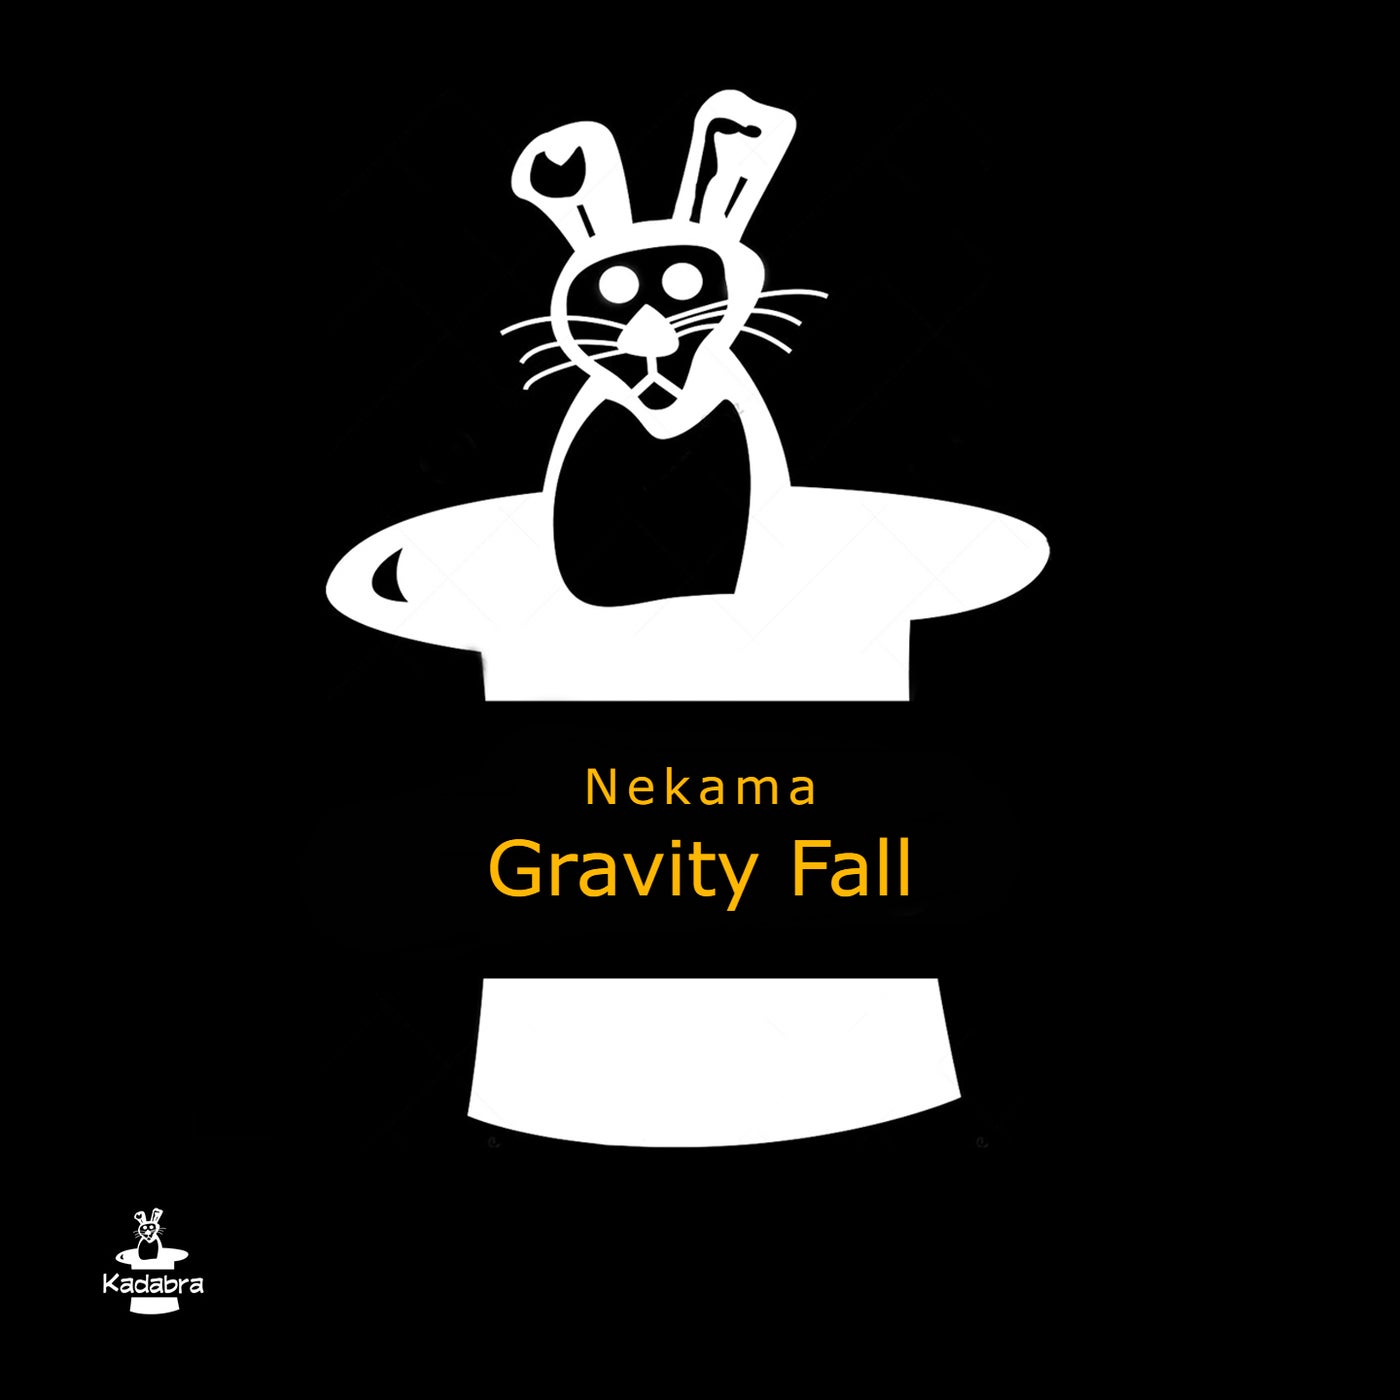 Gravity Fall